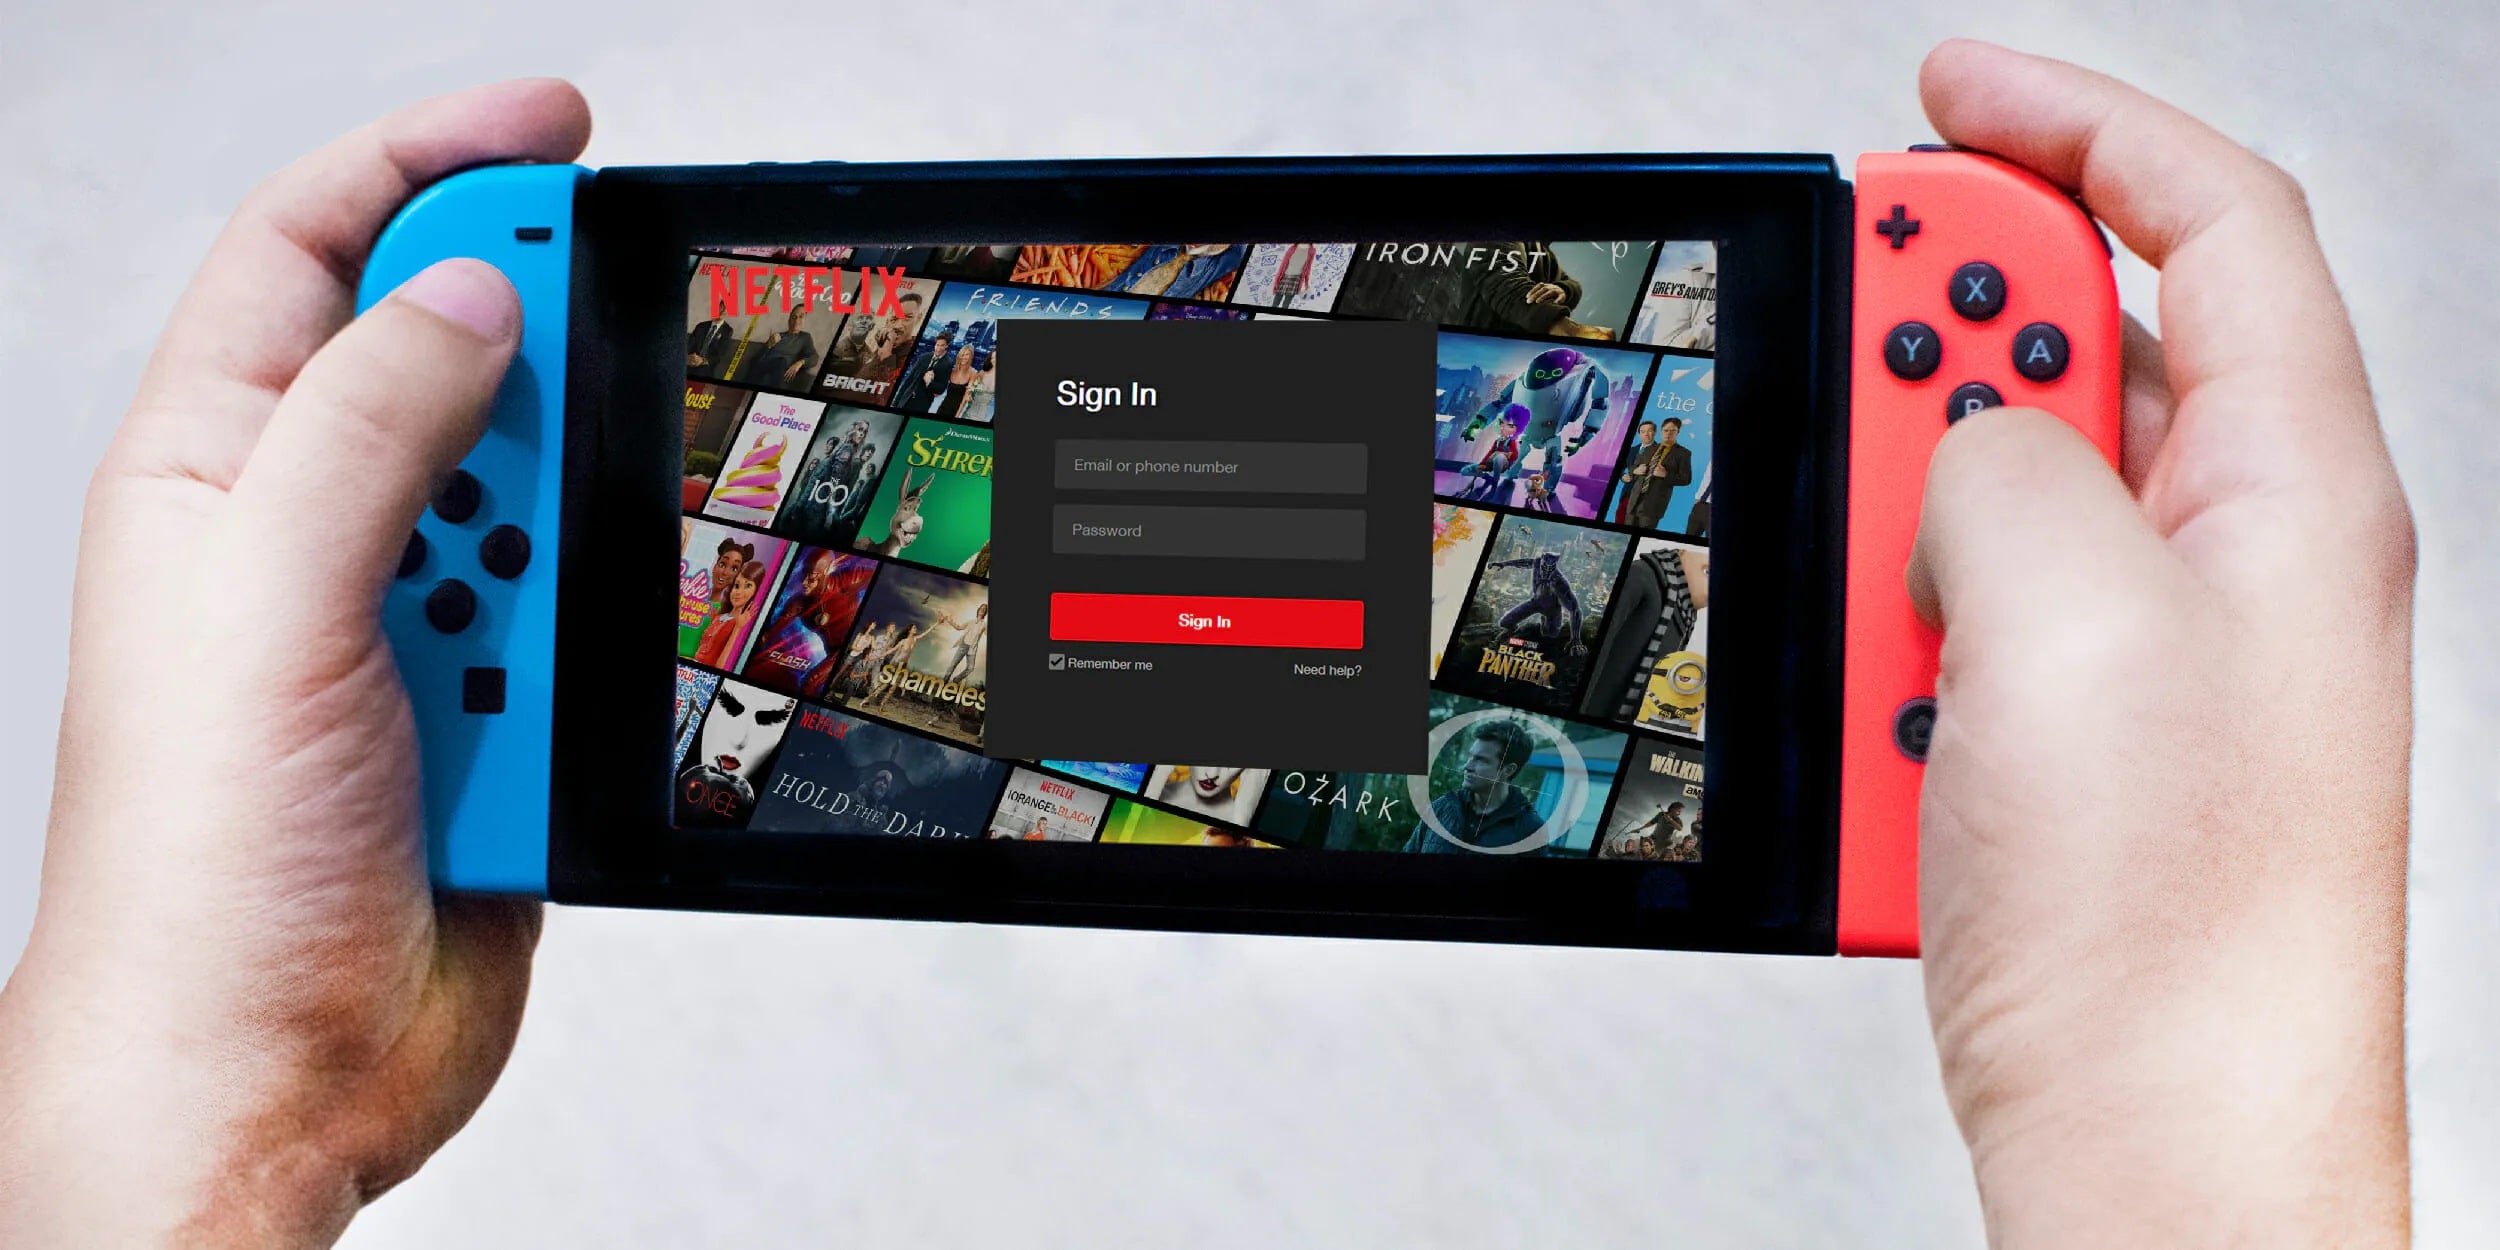 How To Watch Netflix On Nintendo Switch?